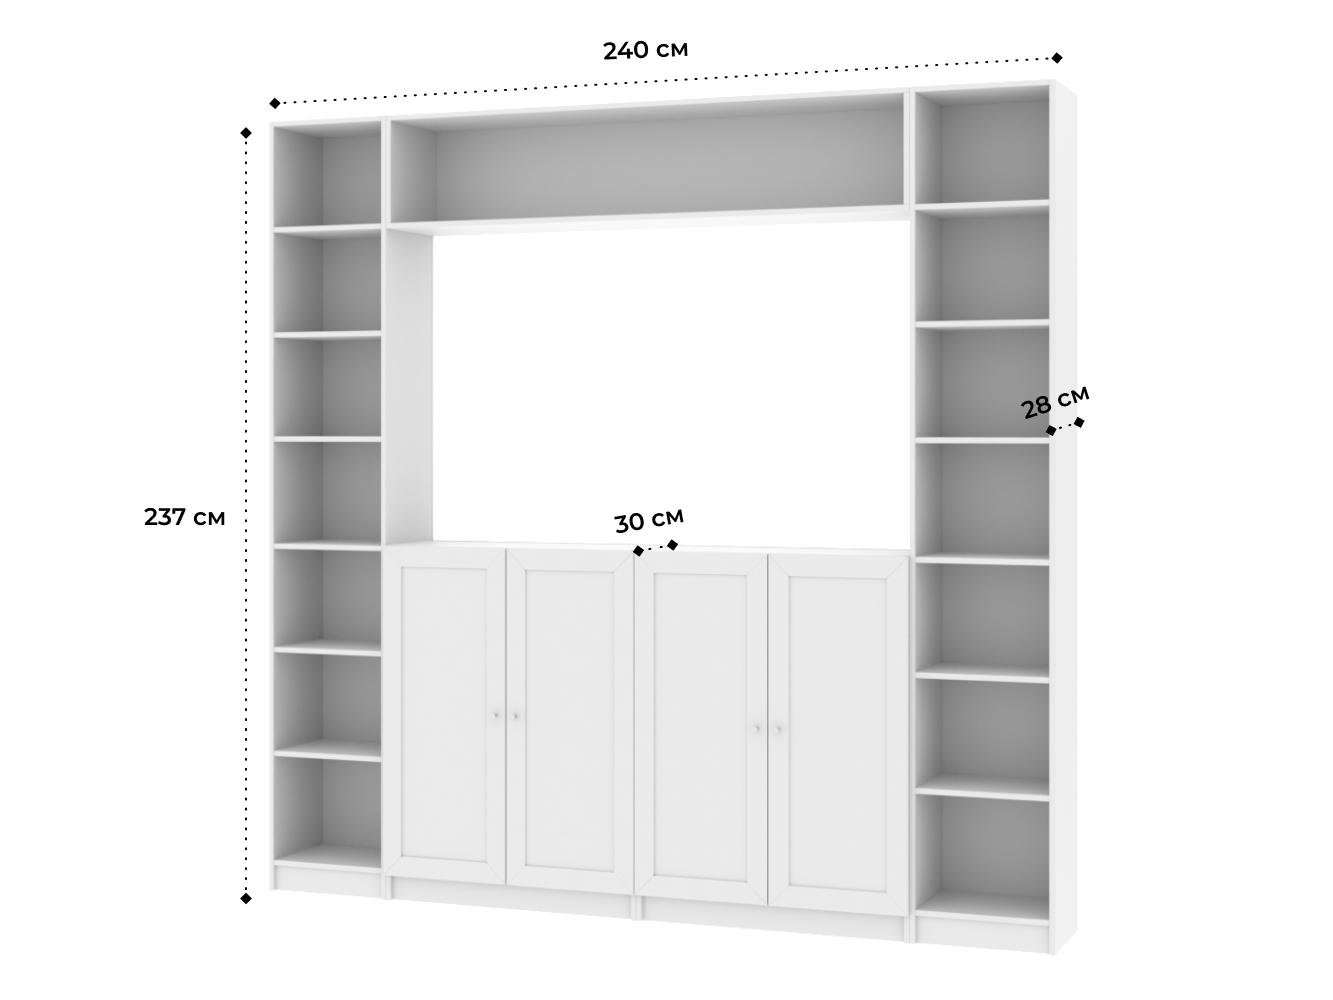  Книжный шкаф Билли 391 white ИКЕА (IKEA) изображение товара